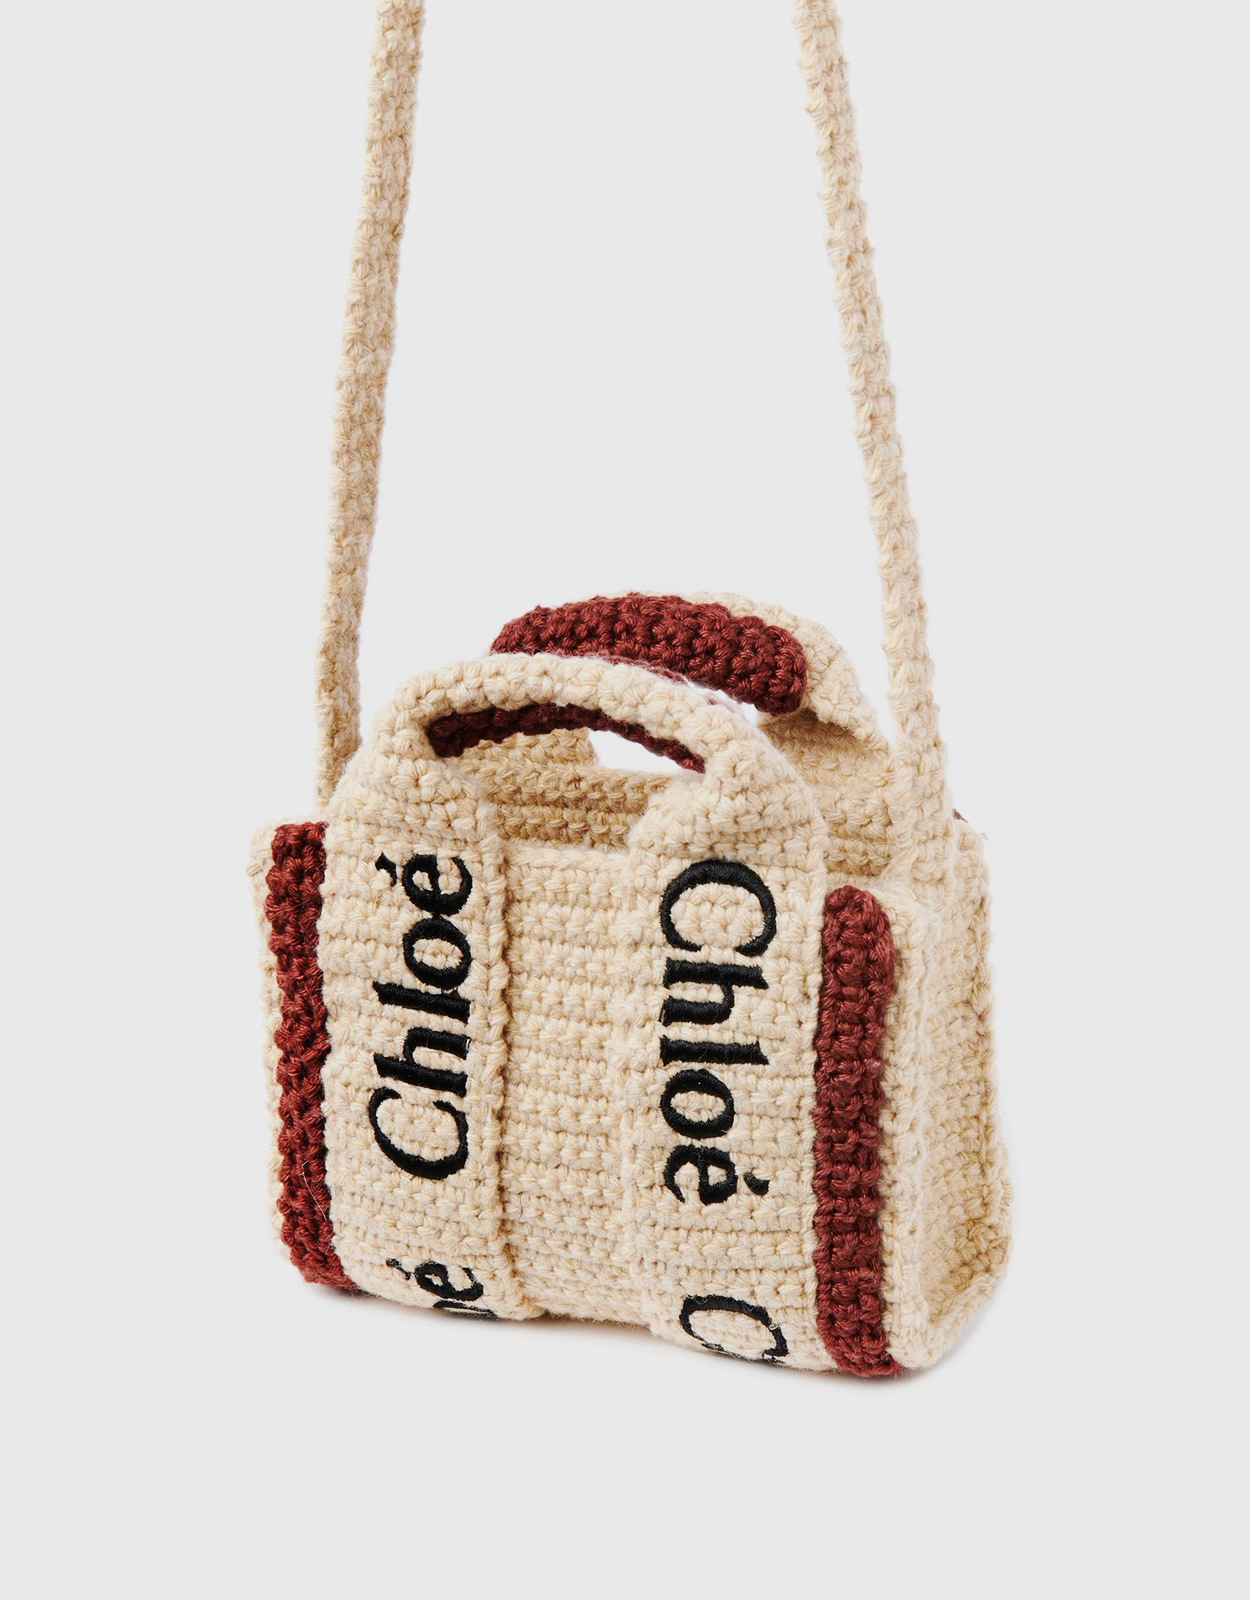 DIY Prada Raffia Tote Bag  Easy Follow Through Crochet Tote Bag